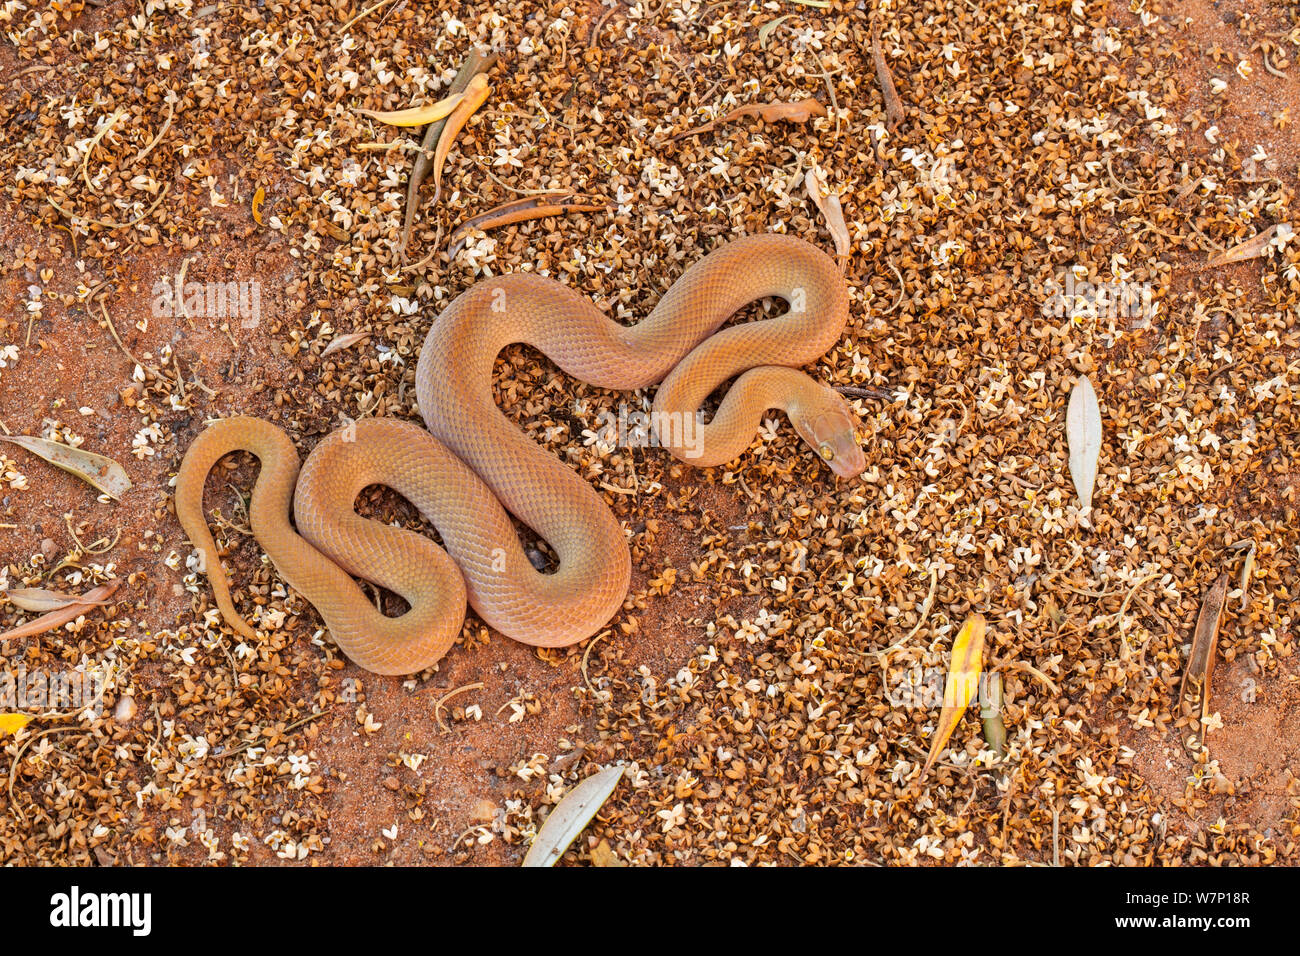 Namibian / Big Eyed House Snake (Boaedon / Lamprophis mentalis). Springbok, South Africa, October. Stock Photo